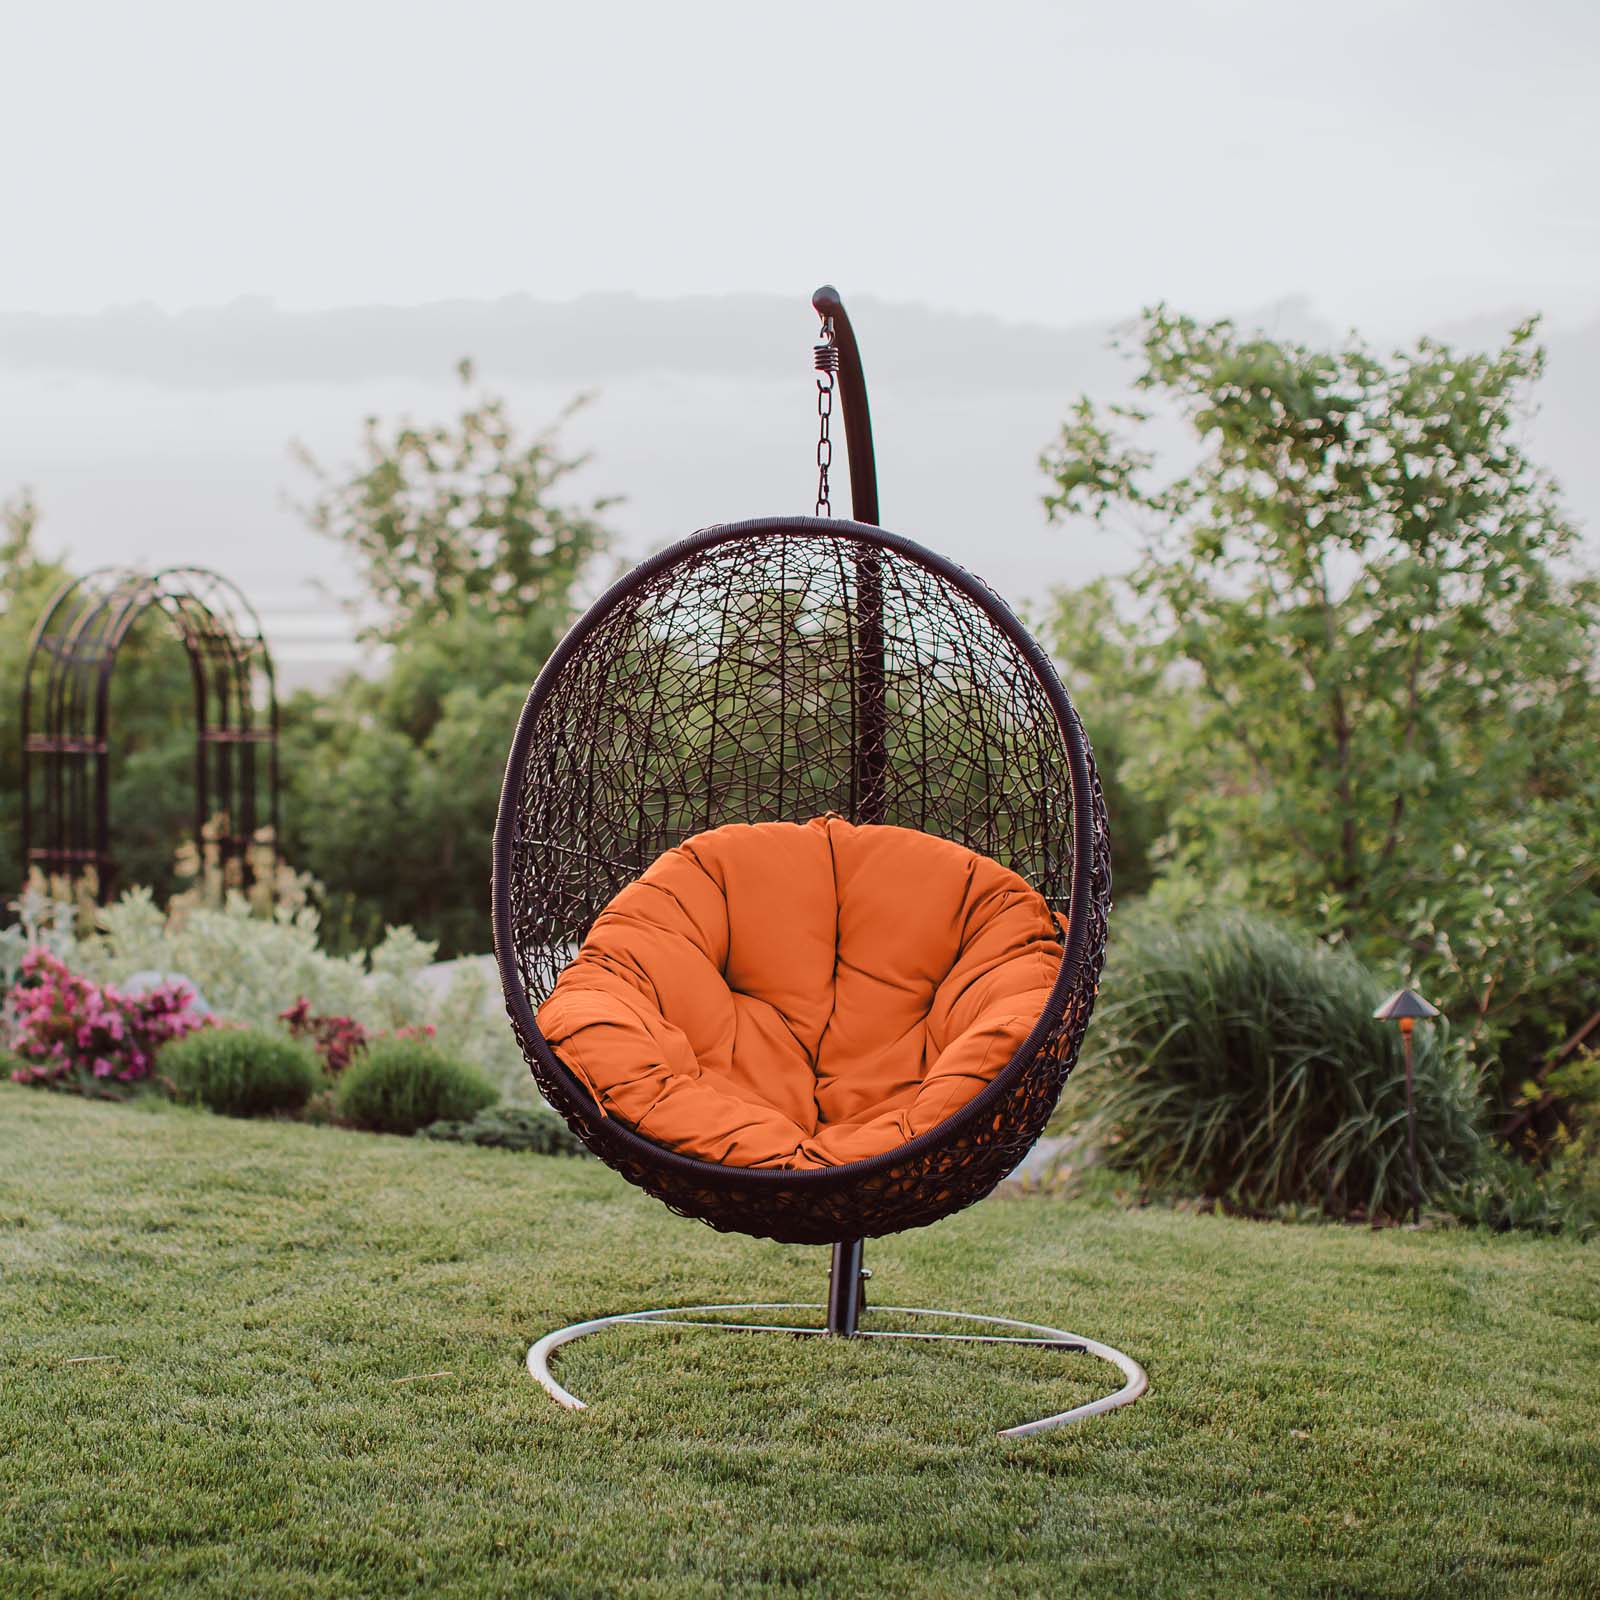 Modern Contemporary Urban Design Outdoor Patio Balcony Garden Furniture Swing Lounge Chair, Rattan Wicker, Orange - image 2 of 4